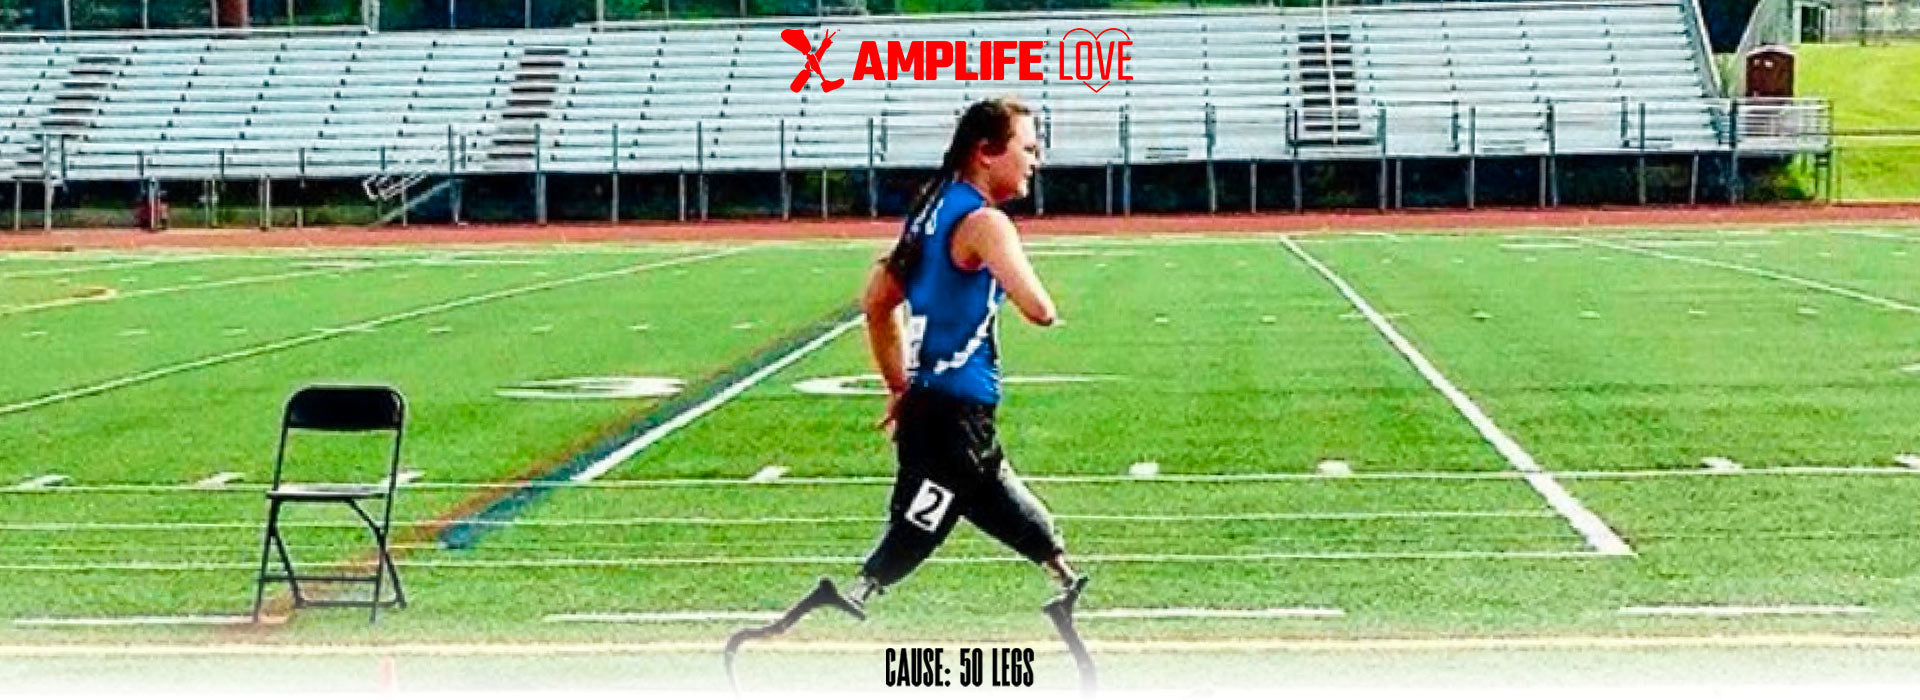 AMPLIFE LOVE CAUSE 50 LEGS